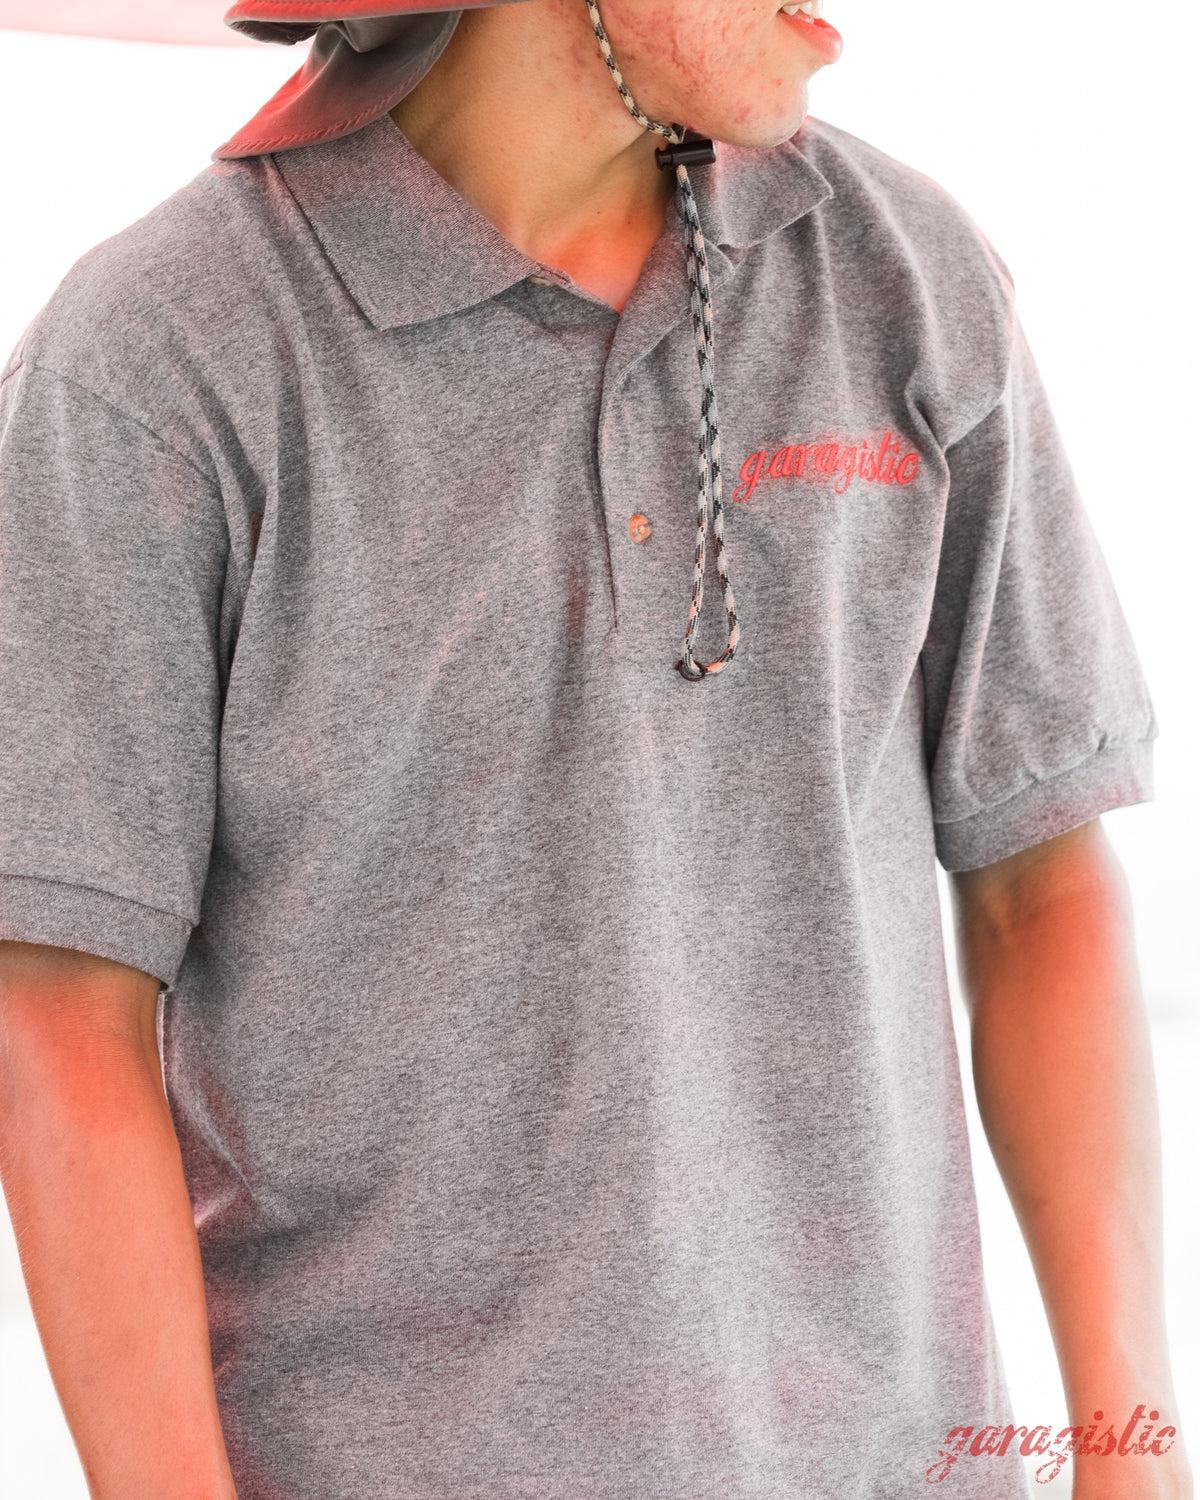 Garagistic Embroidered Polo Shirt-Apparel-S-Heather Grey-Garagistic